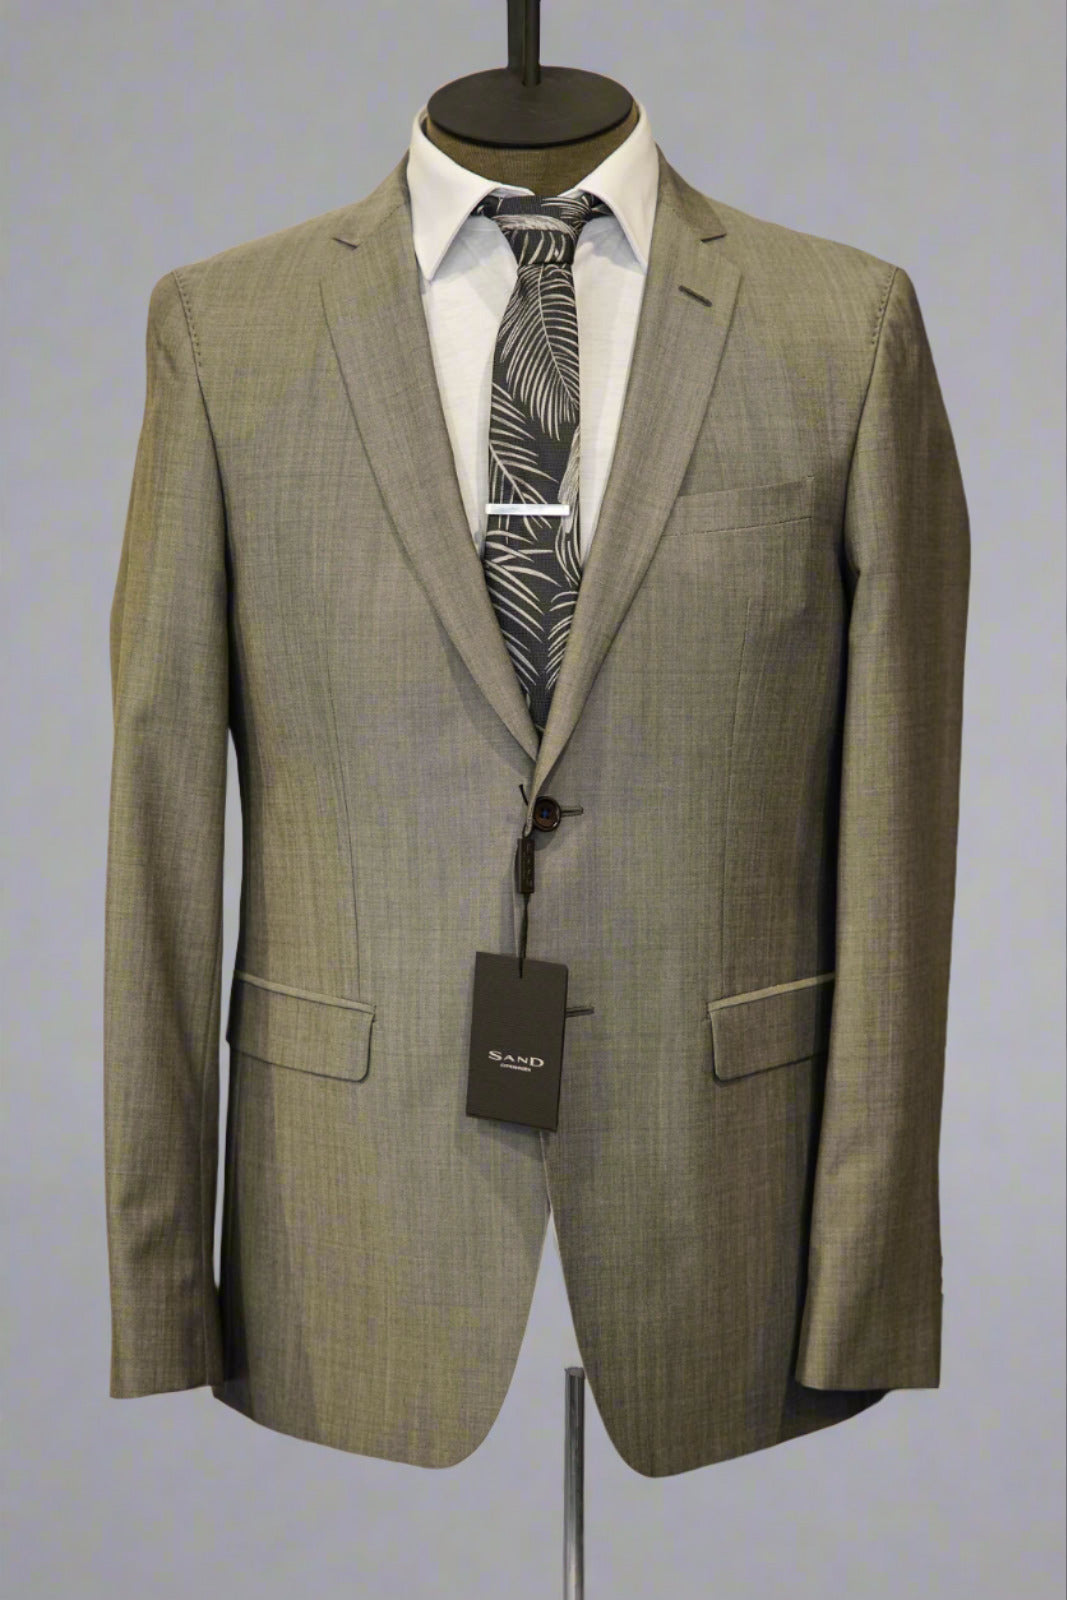 "Sand Copenhagen suit in light grey in Ultimo Euromoda store."